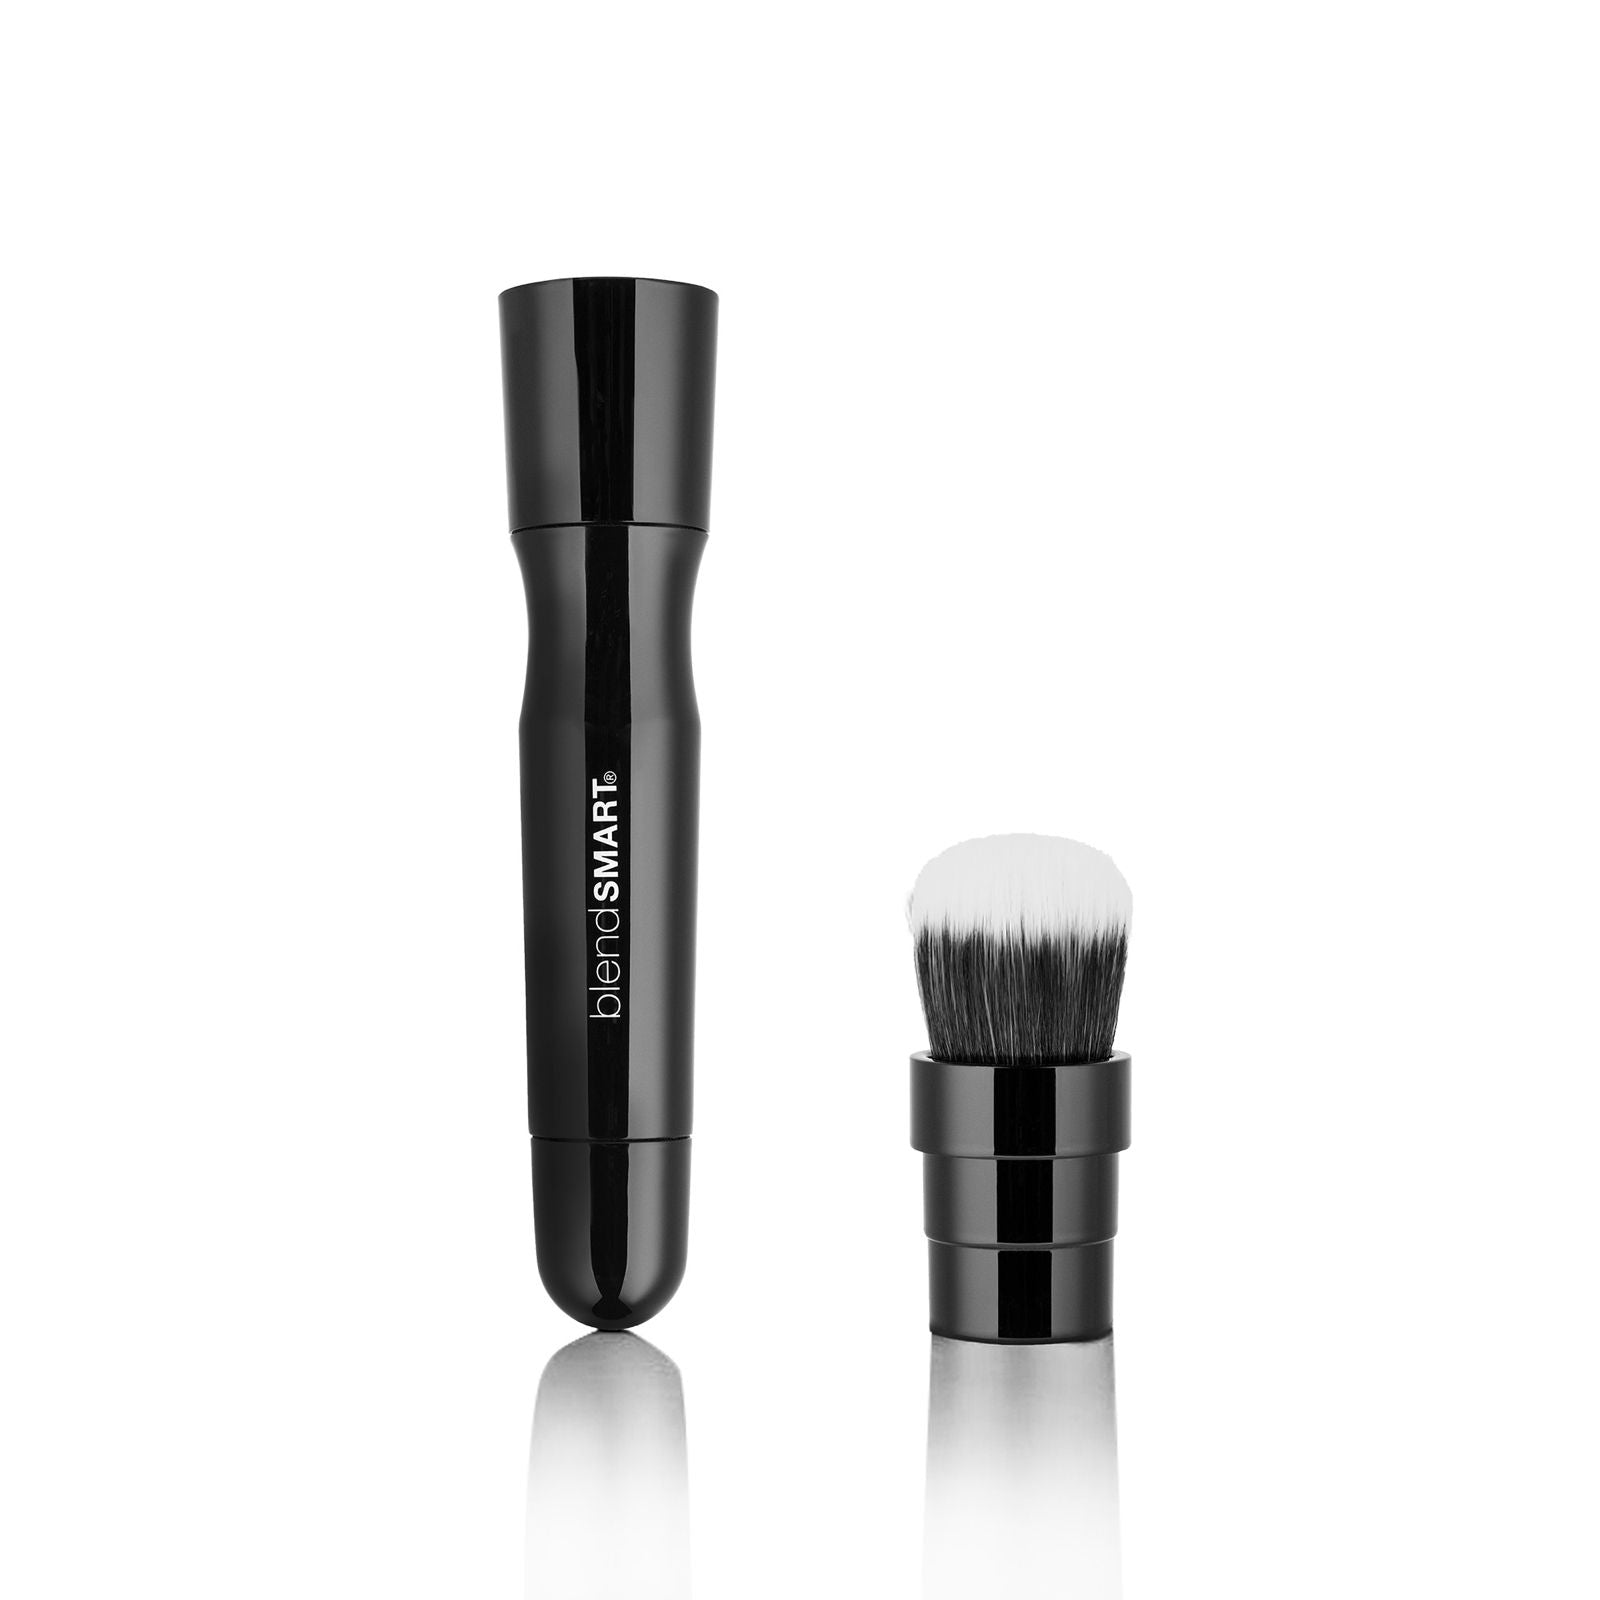 Rotating makeup brush, Foundation Starter Kit